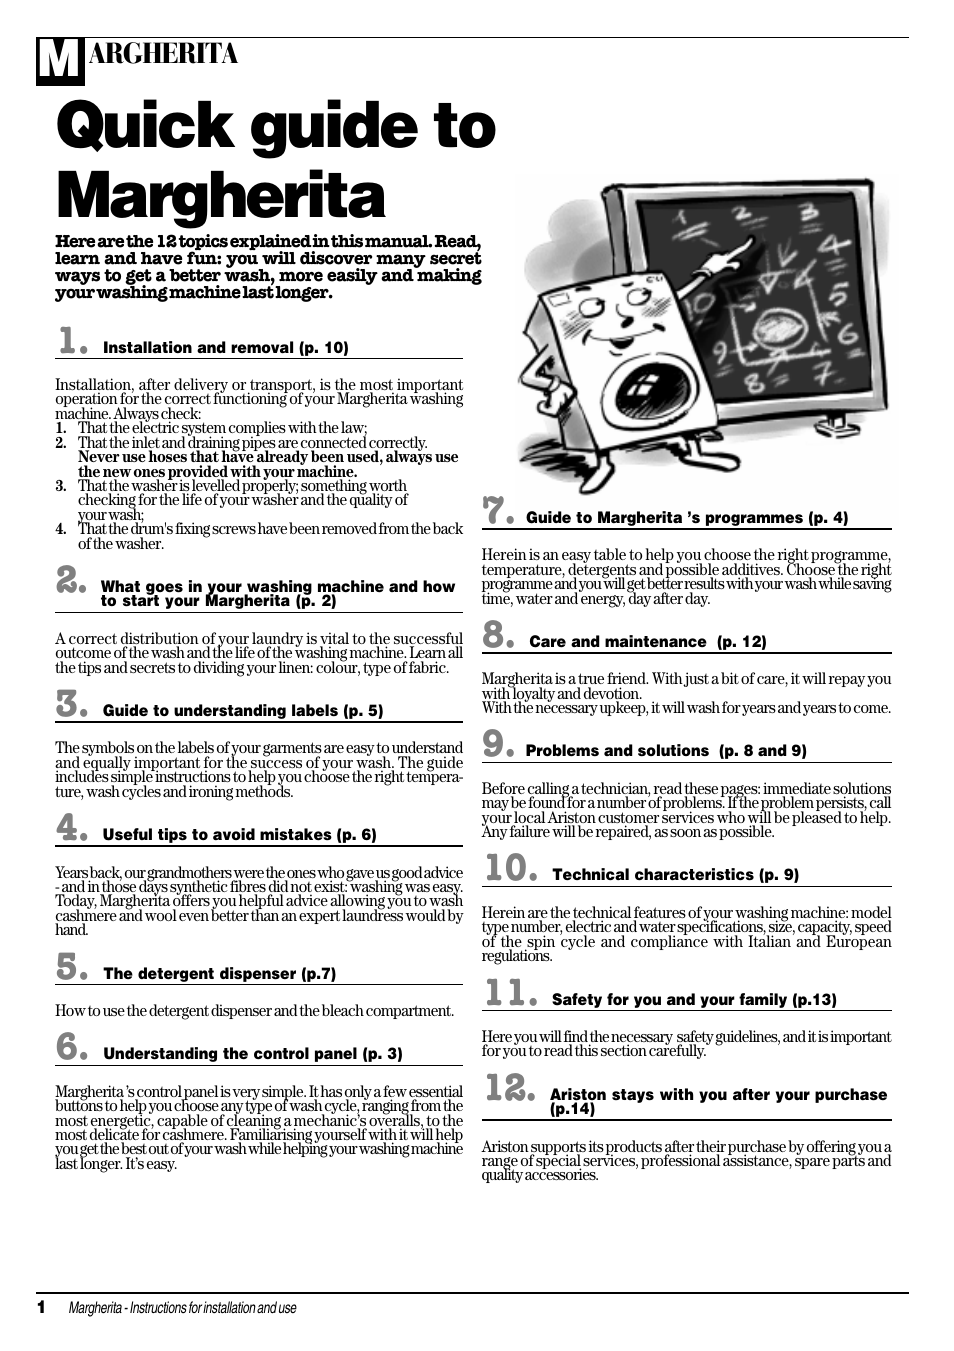 Quick guide to margherita, Argherita | Ariston MARGHERITA A 1635 User  Manual | Page 2 / 16